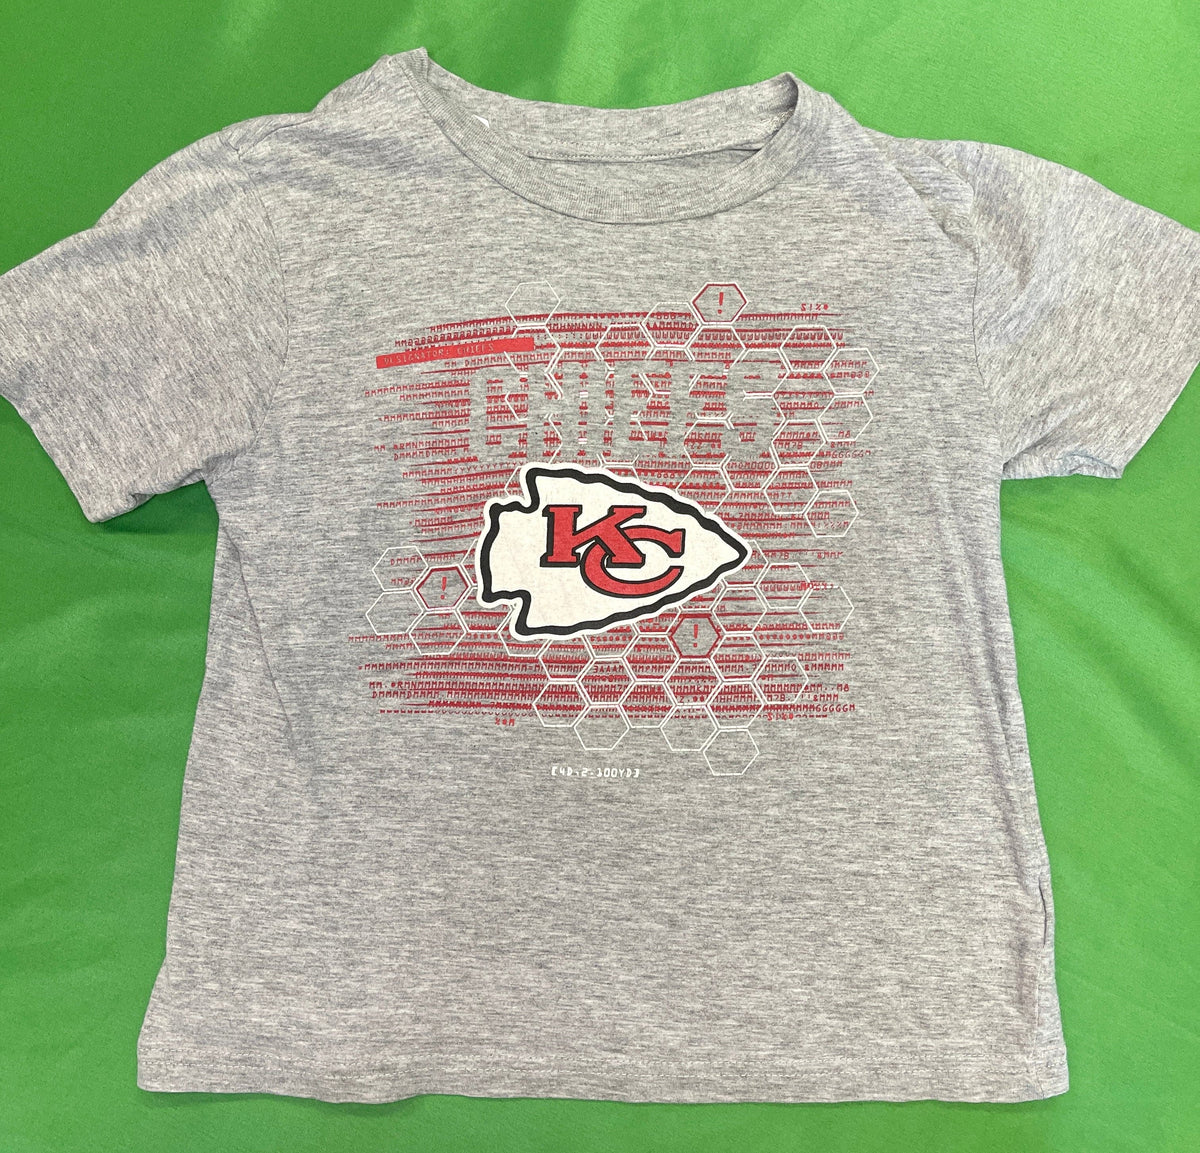 NFL Kansas City Chiefs Heathered Grey T-Shirt Youth Small 7